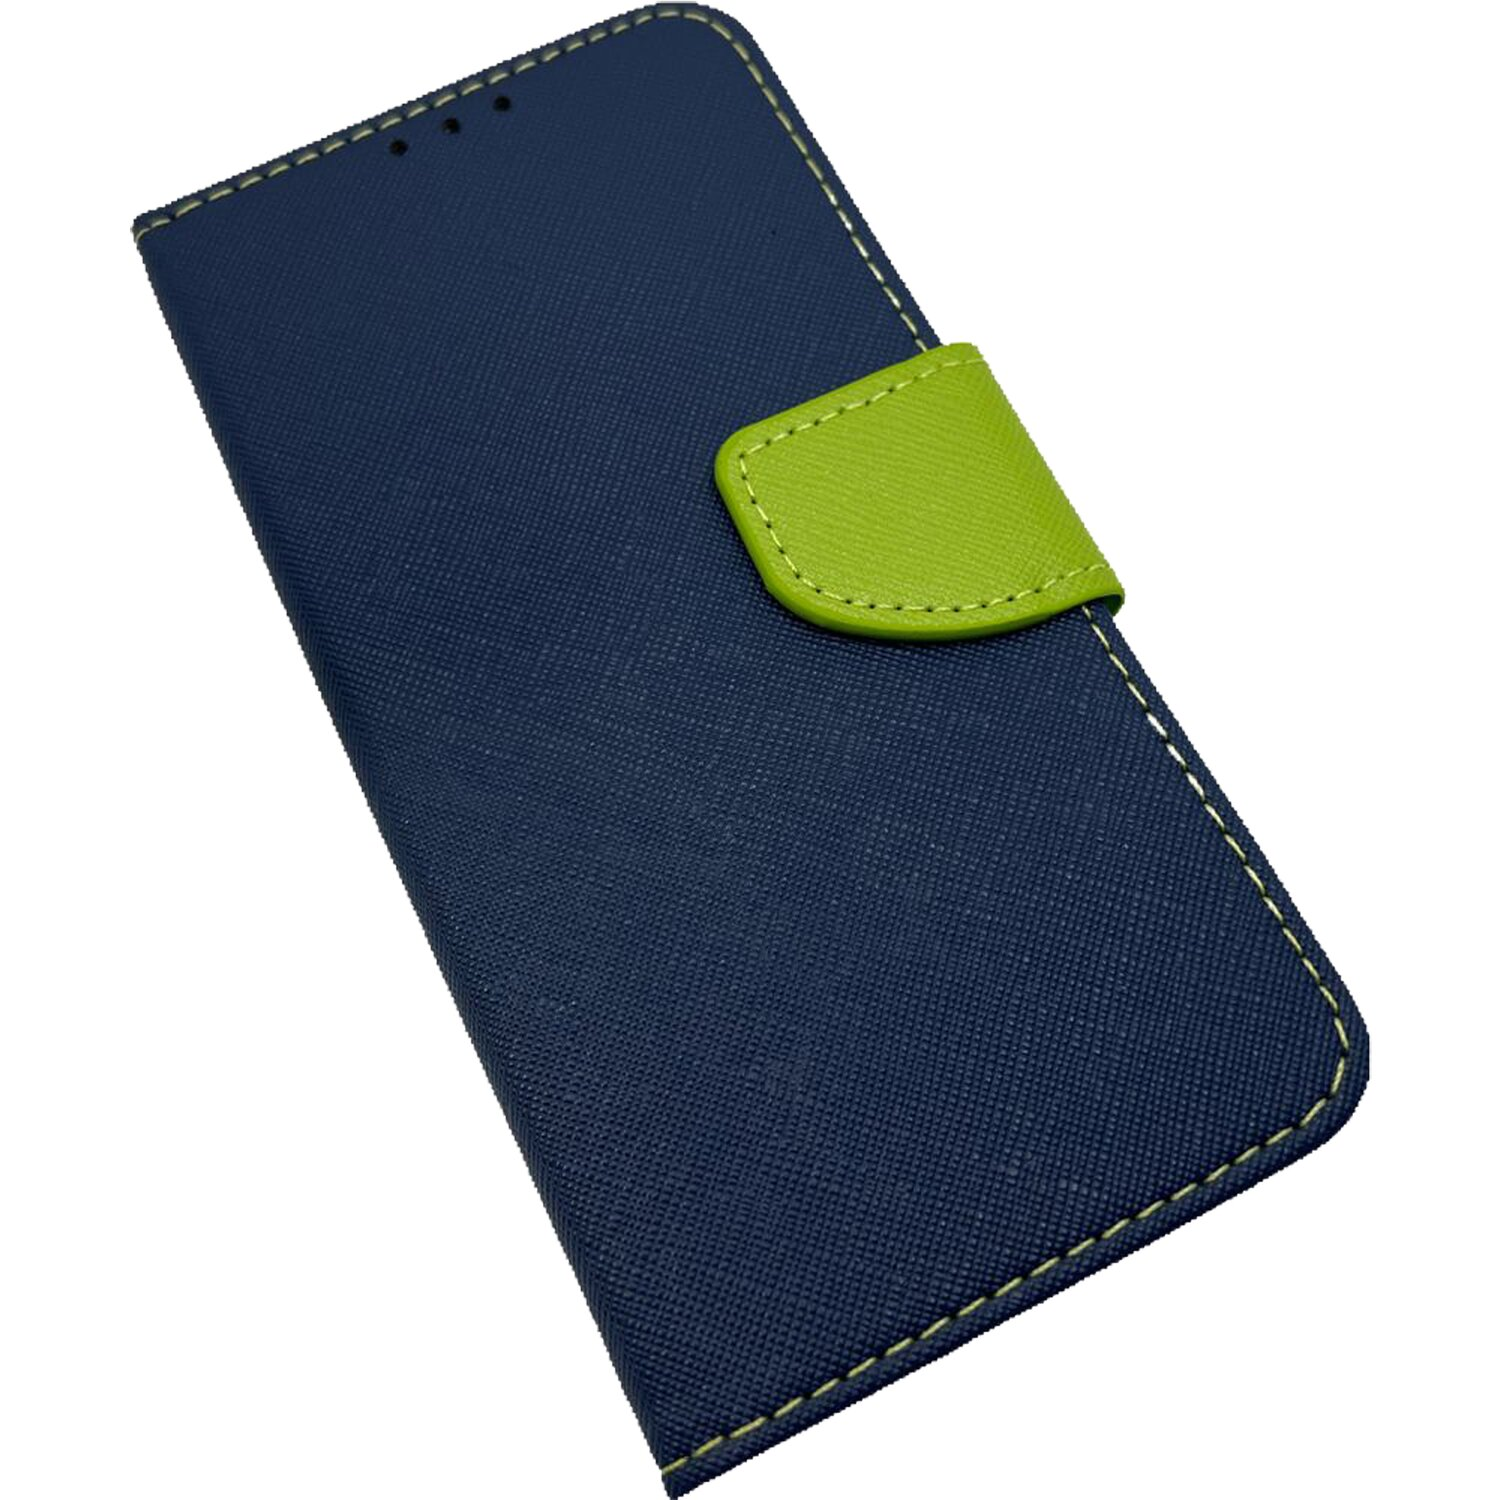 5 EE (Enterprise COFI Samsung, Blau-Grün Galaxy Xcover Buch Tasche, Edition), Bookcover,